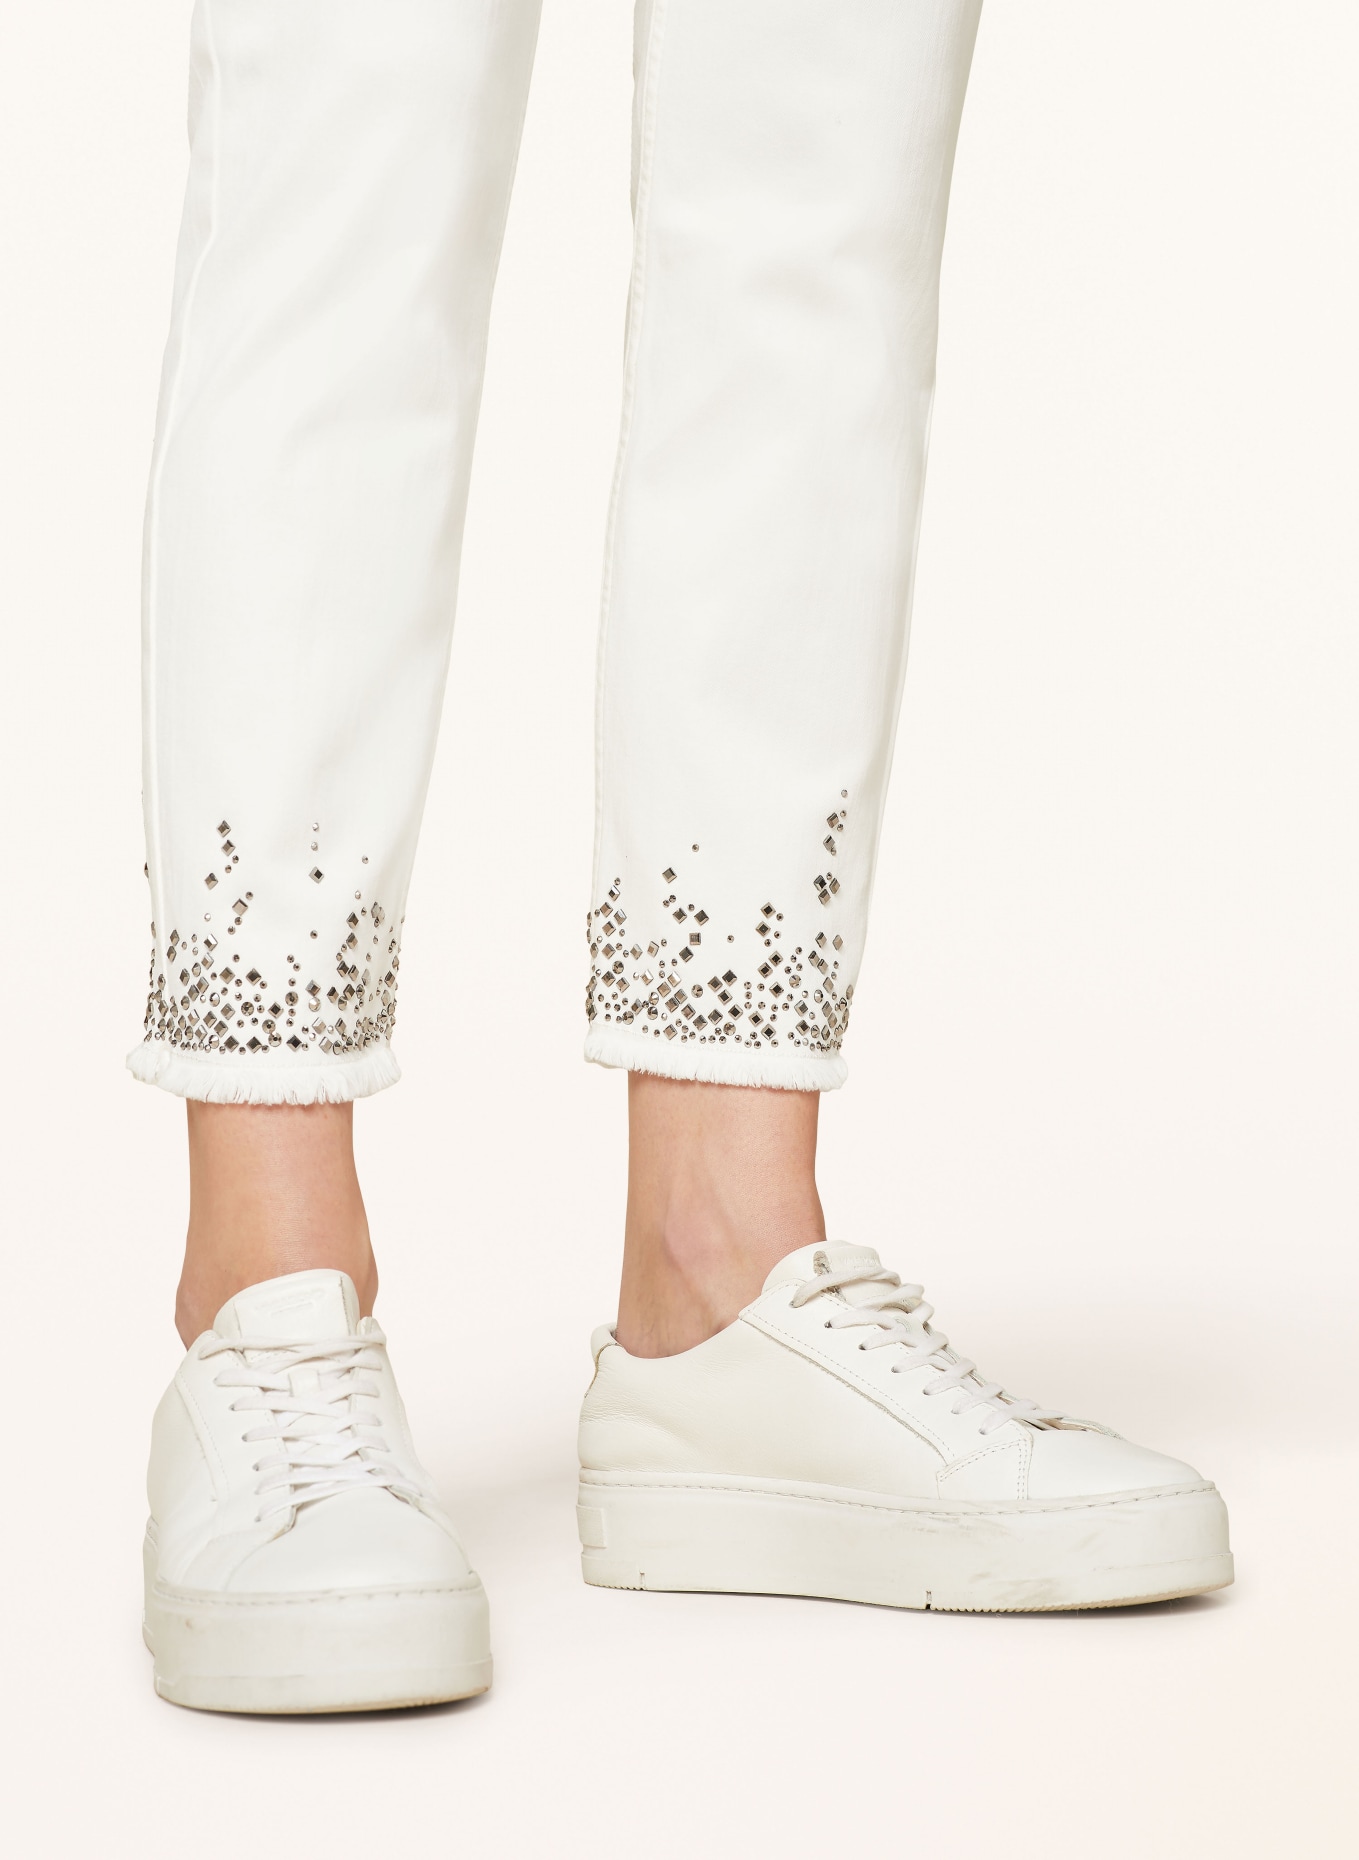 monari 7/8 jeans with decorative gems, Color: WHITE (Image 5)